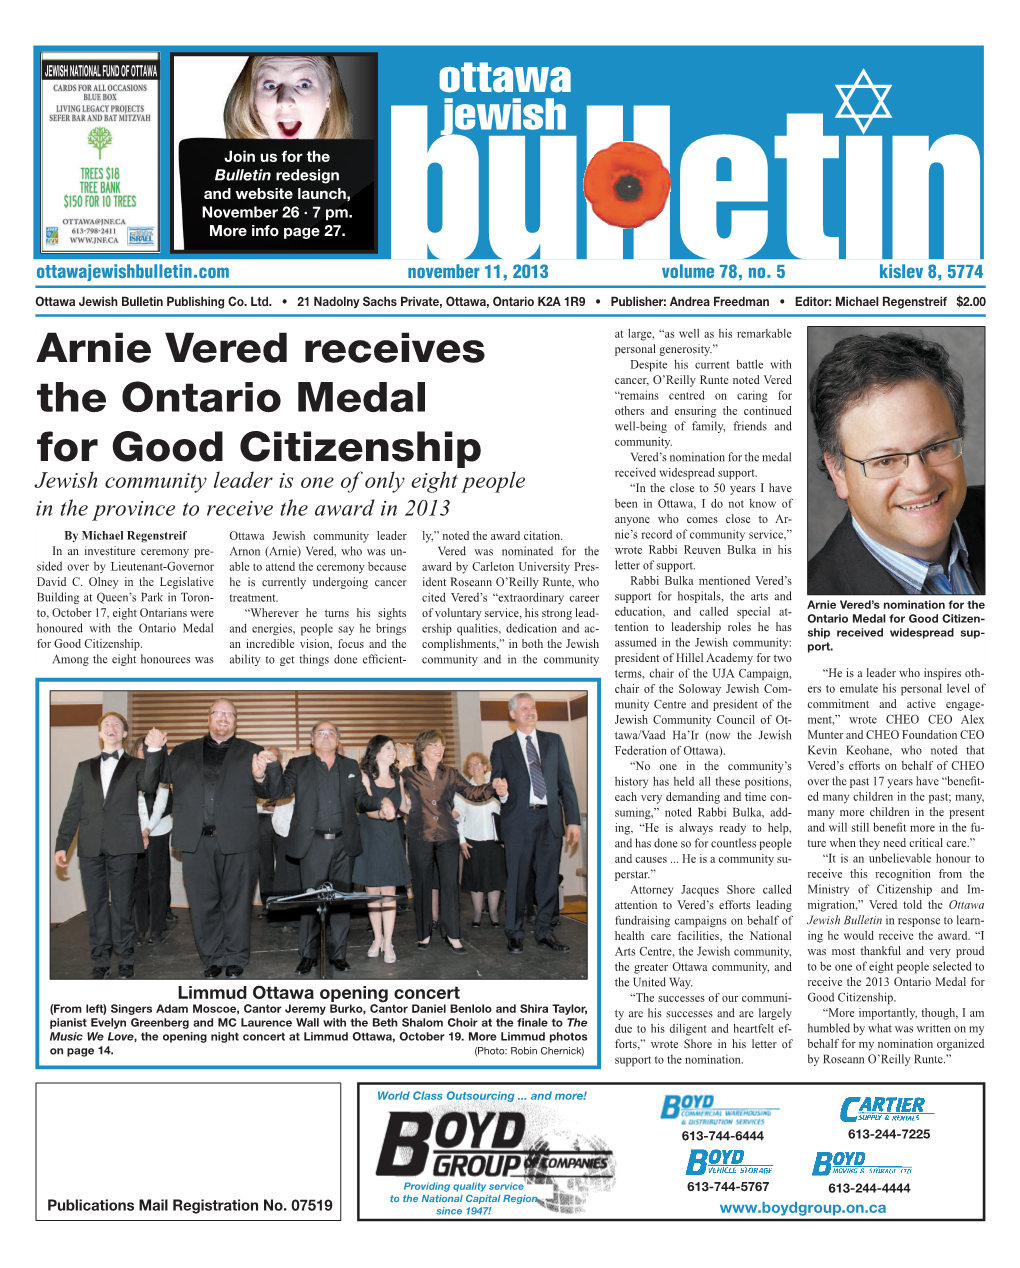 Ottawa Jewish Bulletin Publishing Co